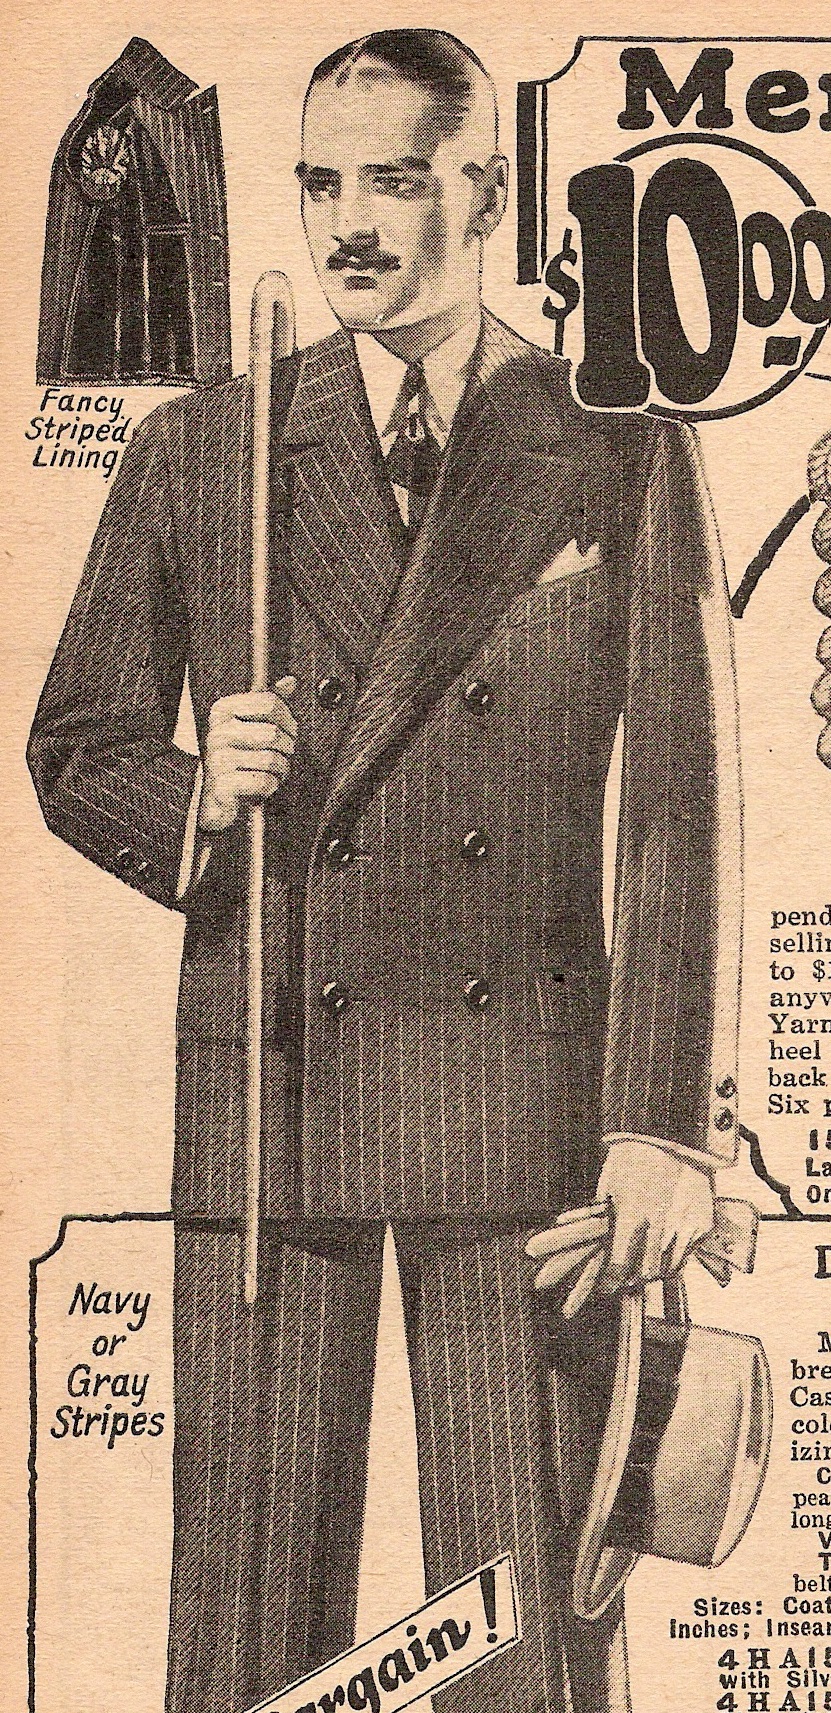 1920s Men’s Accessories History: Gloves, Watches, Belt, Spats, Sleeve Garters